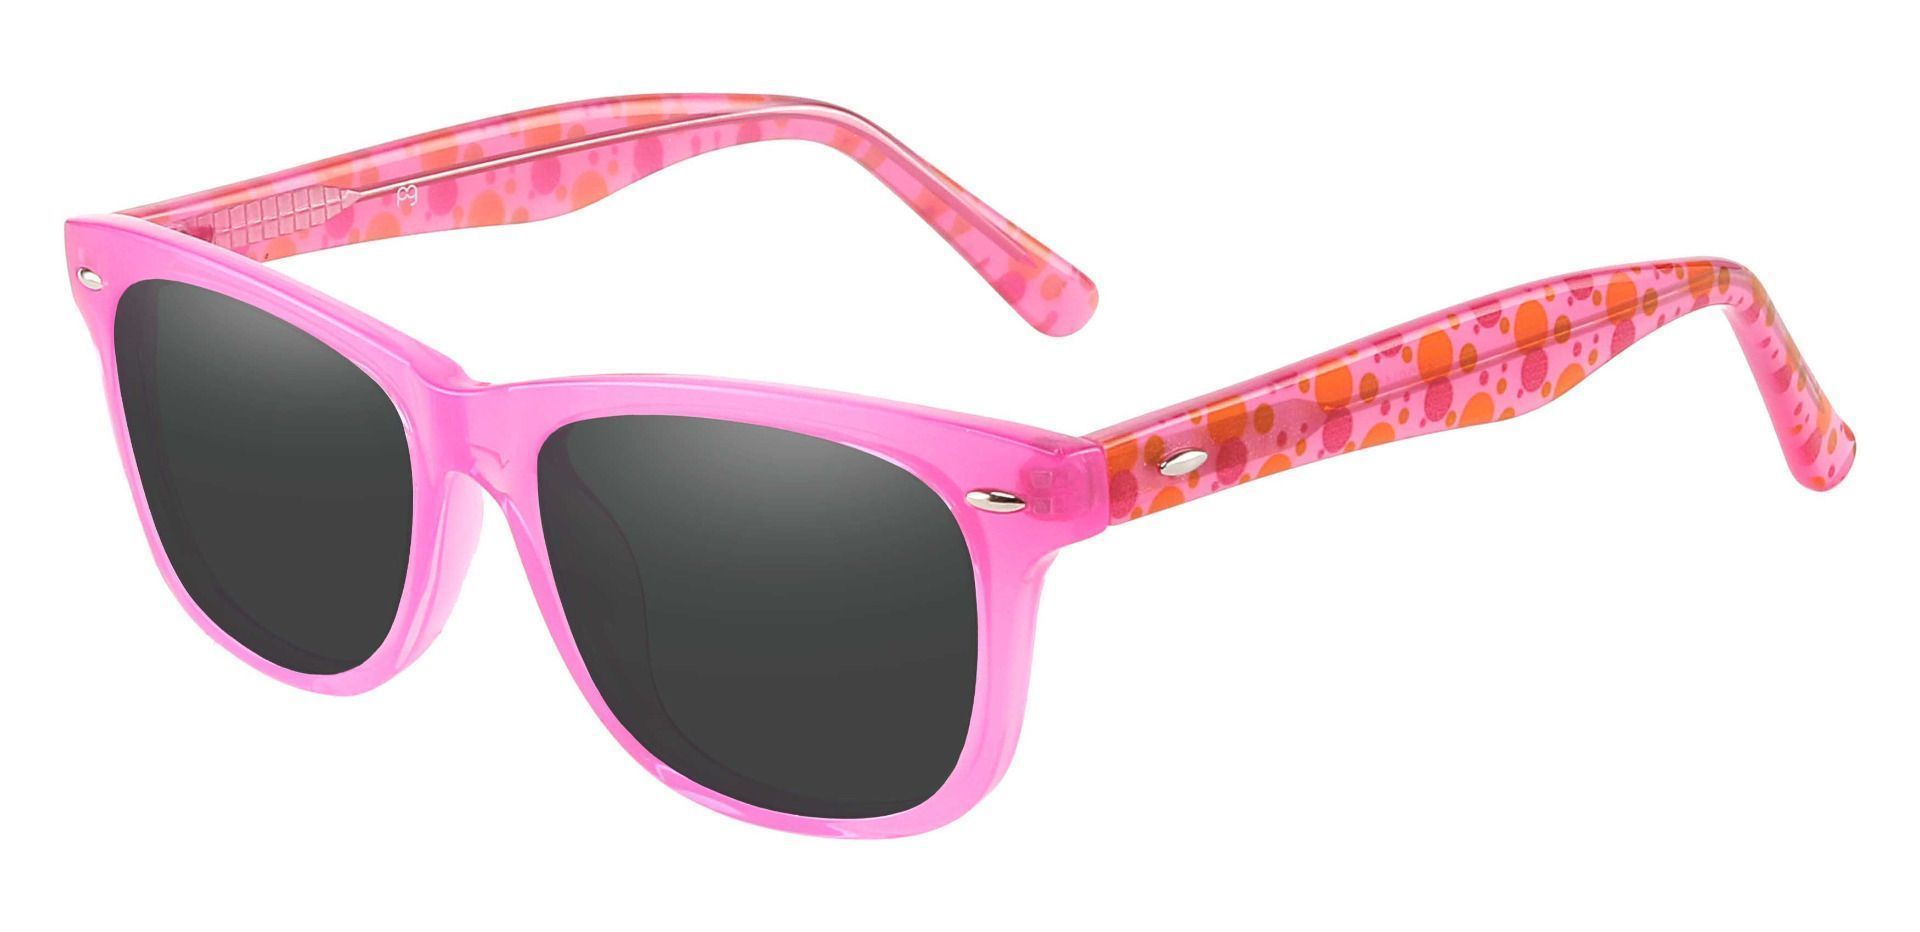 Eureka Square Prescription Sunglasses - Pink Frame With Gray Lenses